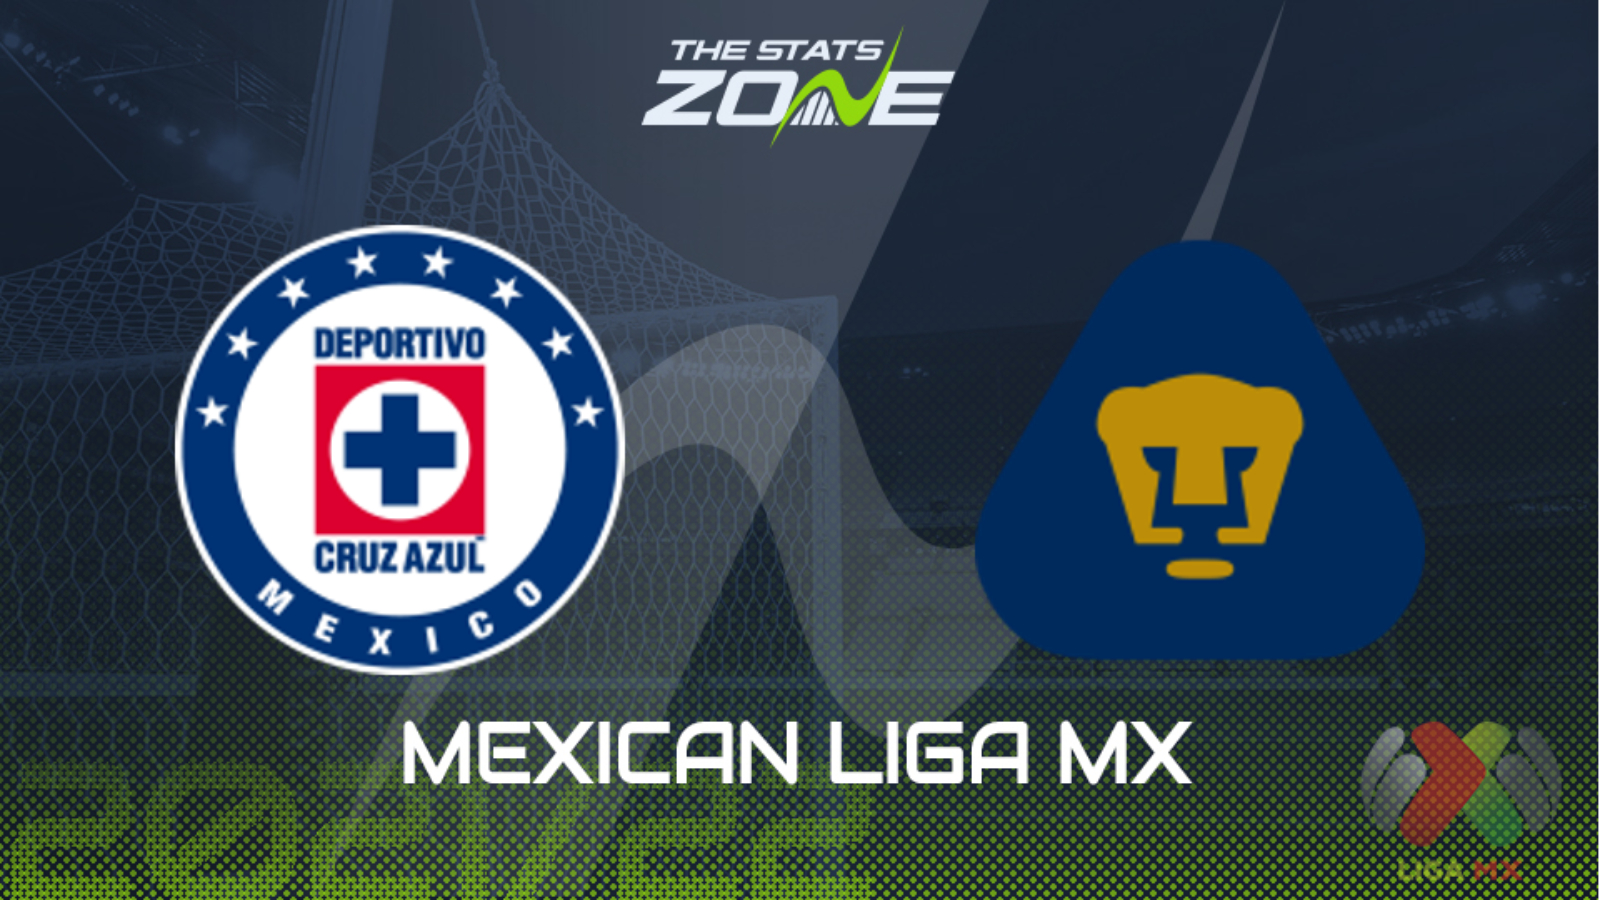 Cruz Azul vs Pumas UNAM Preview Prediction - The Stats Zone